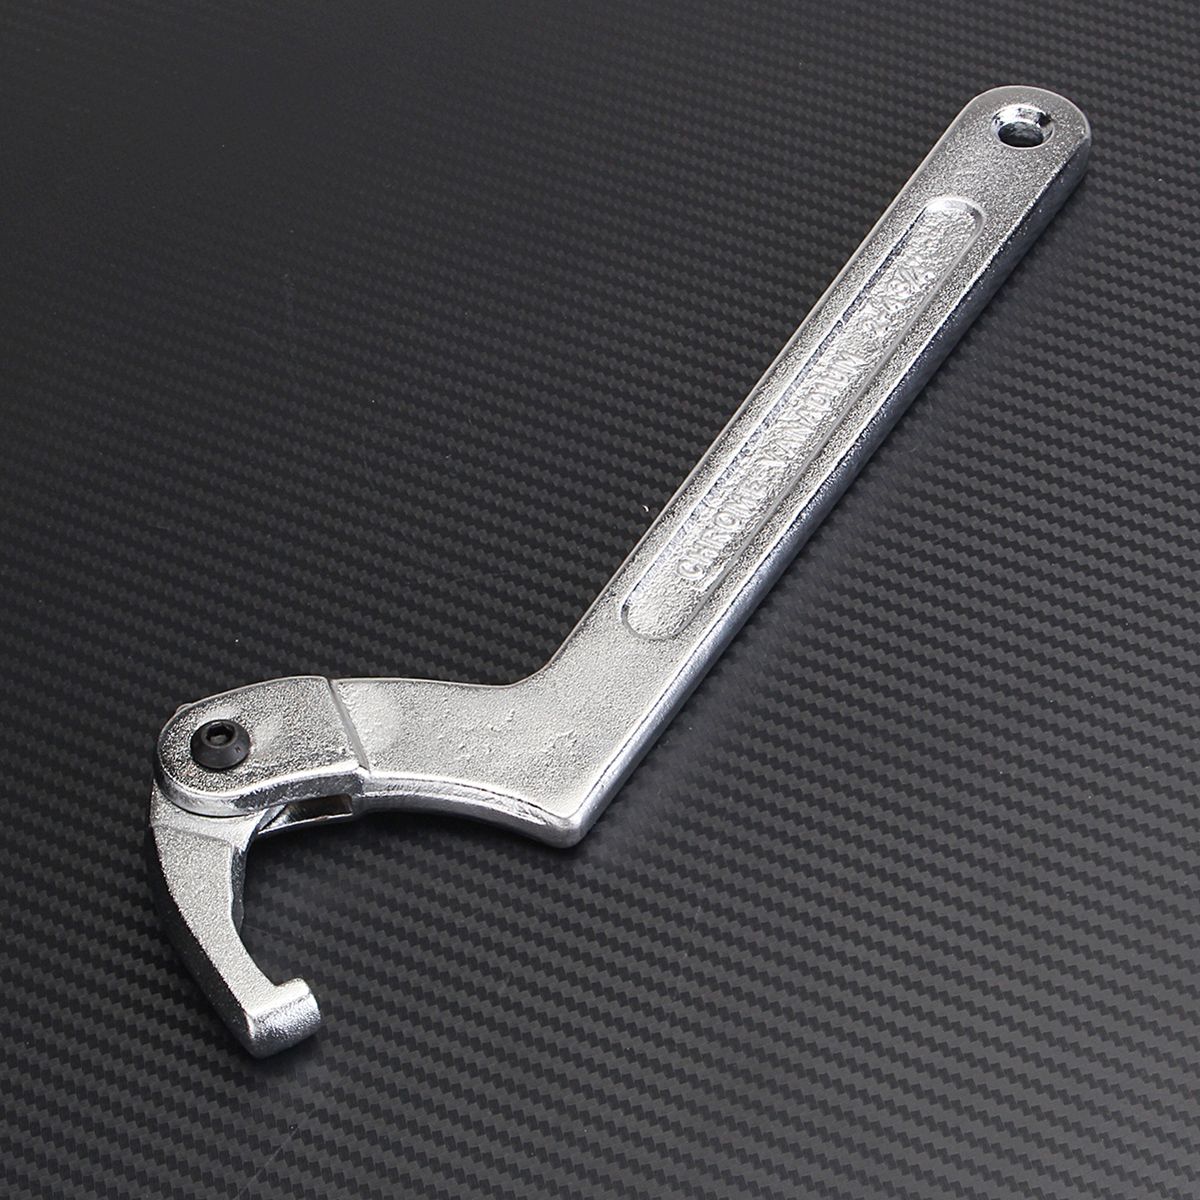 Chrome-Vanadium-Adjustable-Hook-Wrench-C-Spanner-Tool-19-51mm-32-76mm-51-120mm-1220493